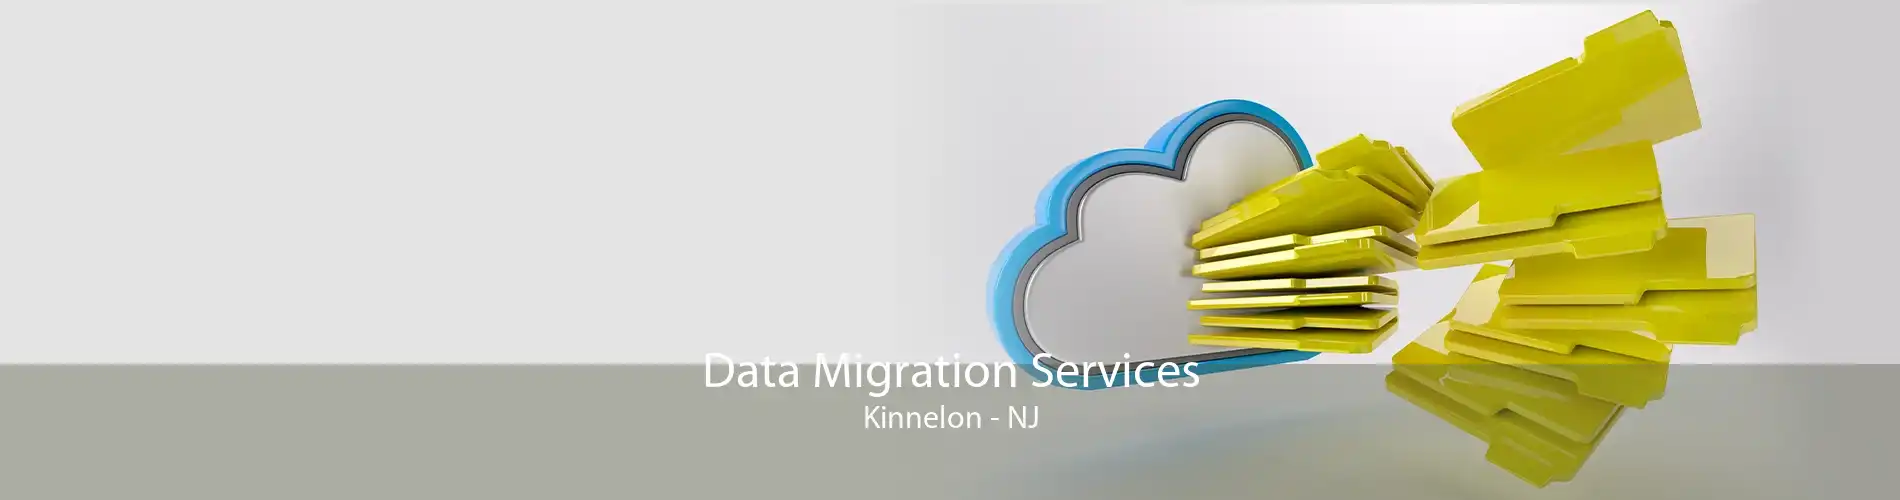 Data Migration Services Kinnelon - NJ